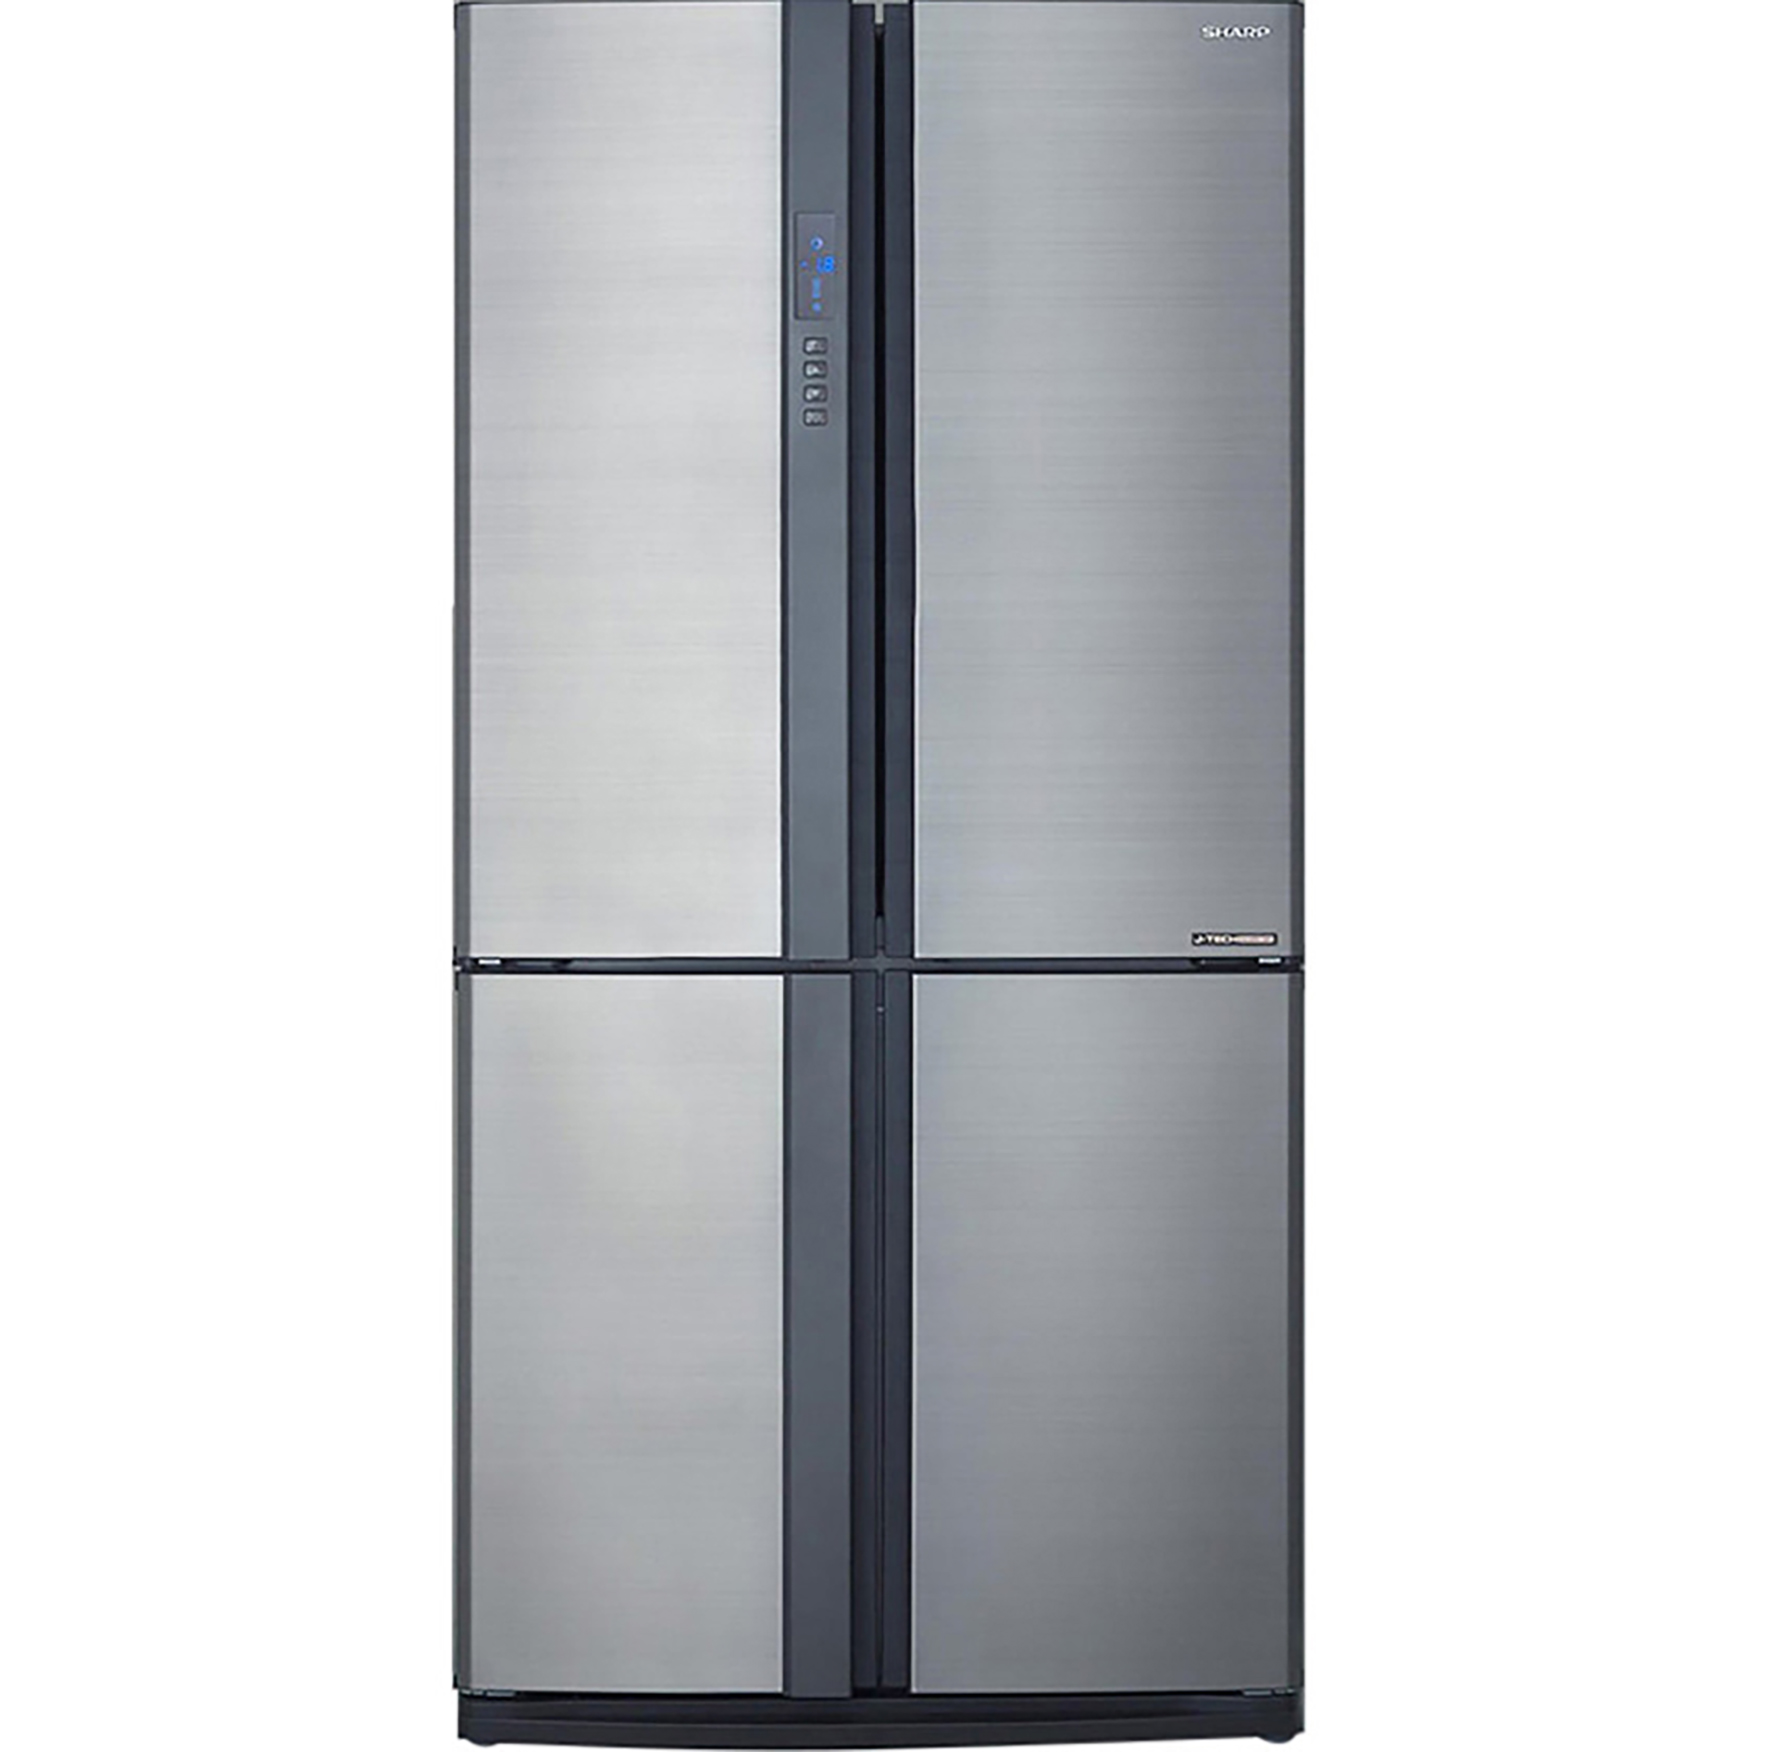 Tủ lạnh side by side Sharp inverter 630 lít SJ-FX630V-ST